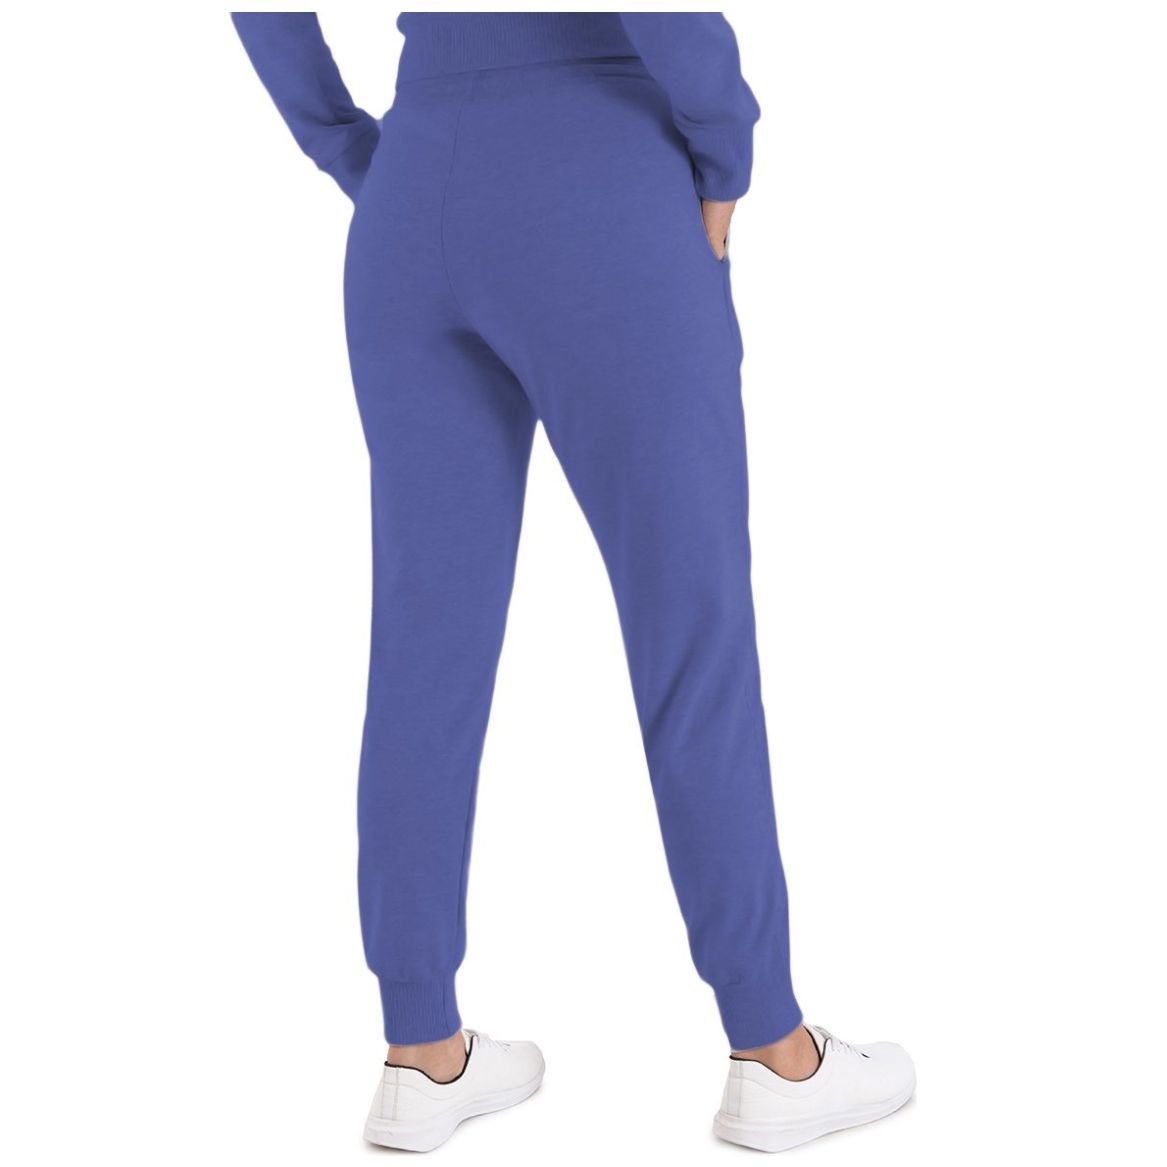 Pants Deportivo Jogger Mujer Azul Everlast 50304802 – SALVAJE